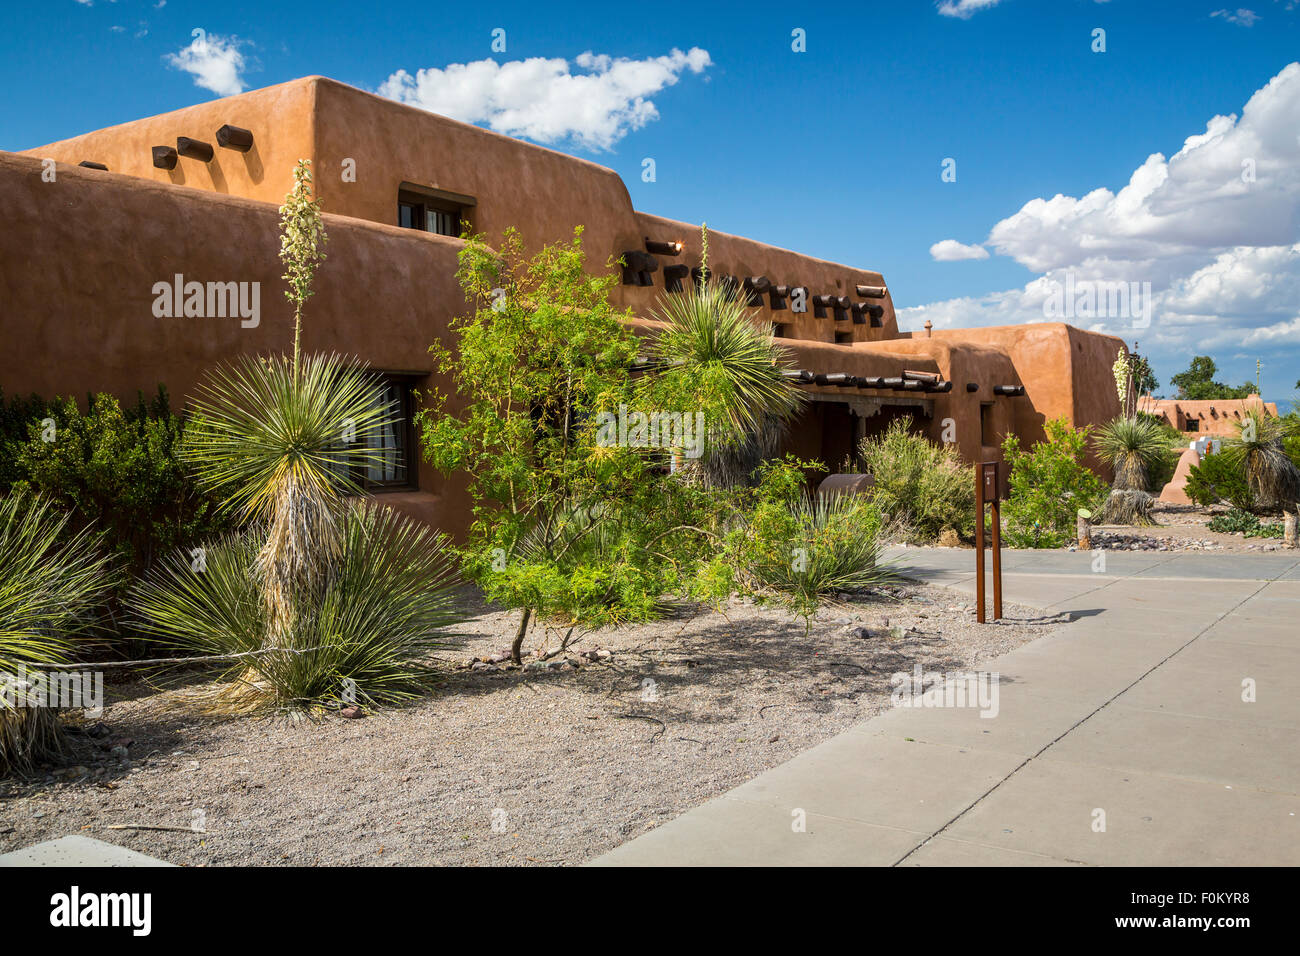 The White Sands National Monument Visitor's Center near Alamogorodo, New Mexico, USA. Stock Photo